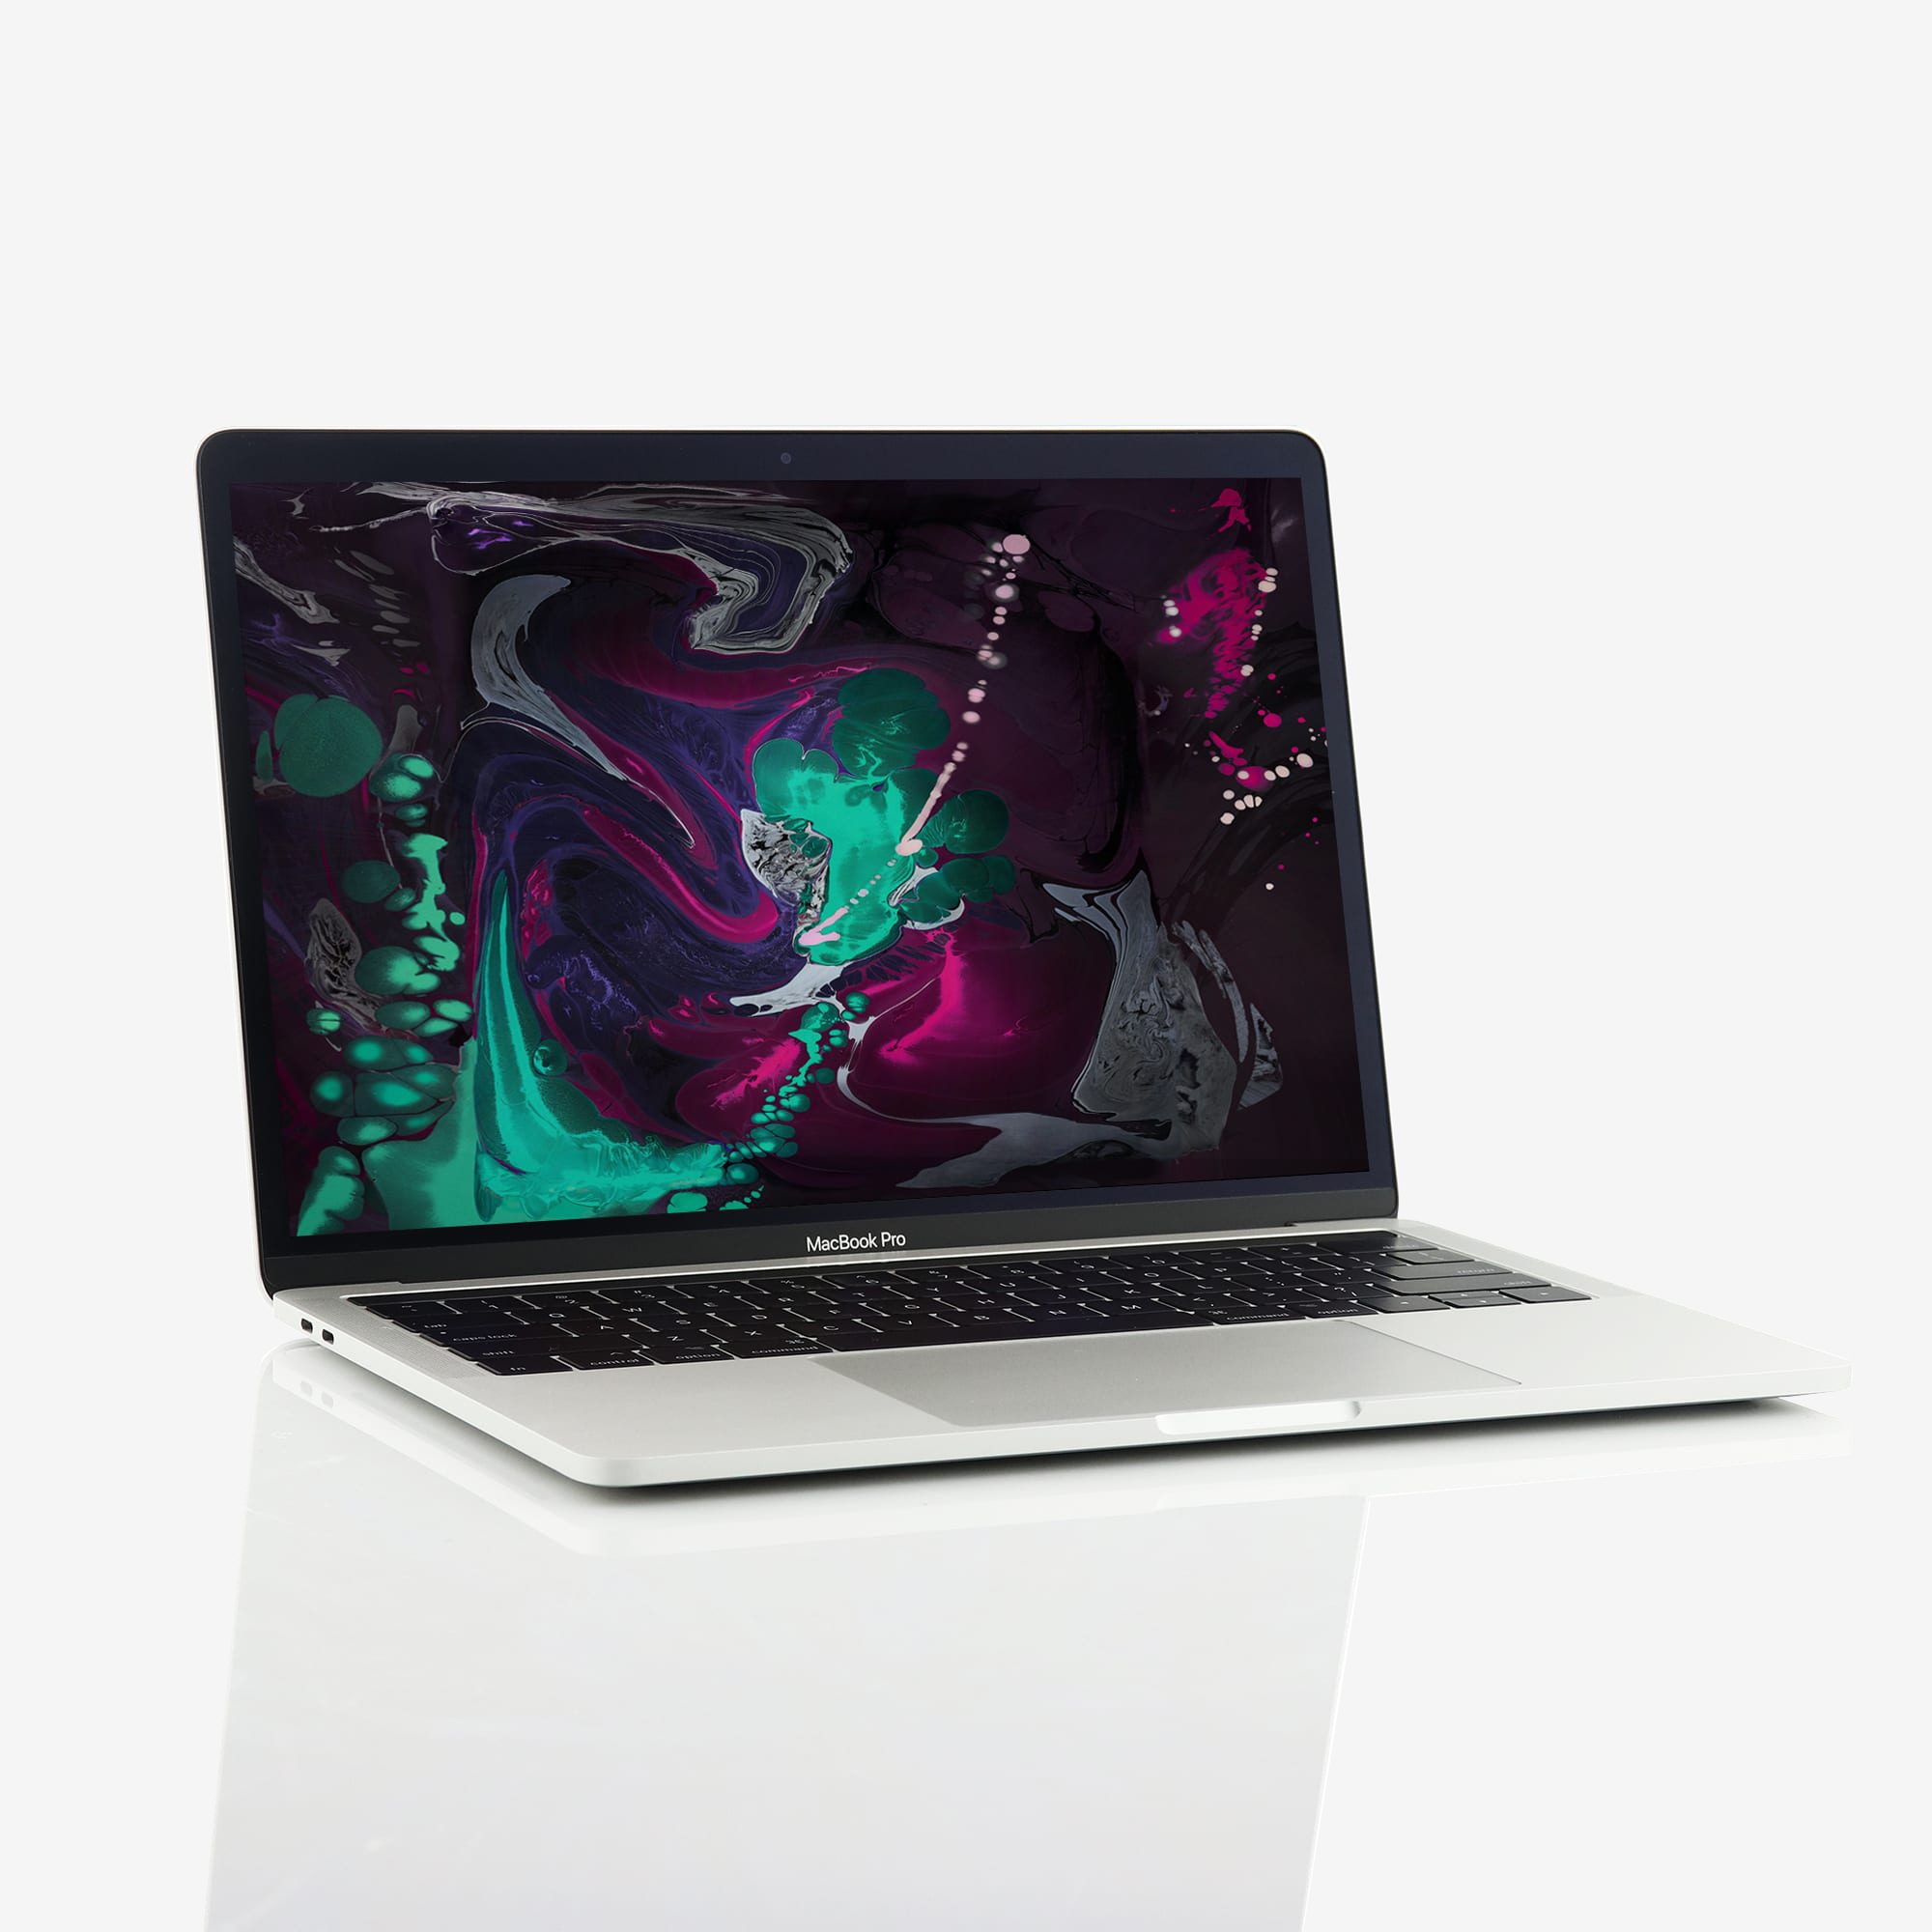 1 x Apple MacBook Pro Retina 13 Inch Touchbar Intel Core i7 3.50 GHz (2017)